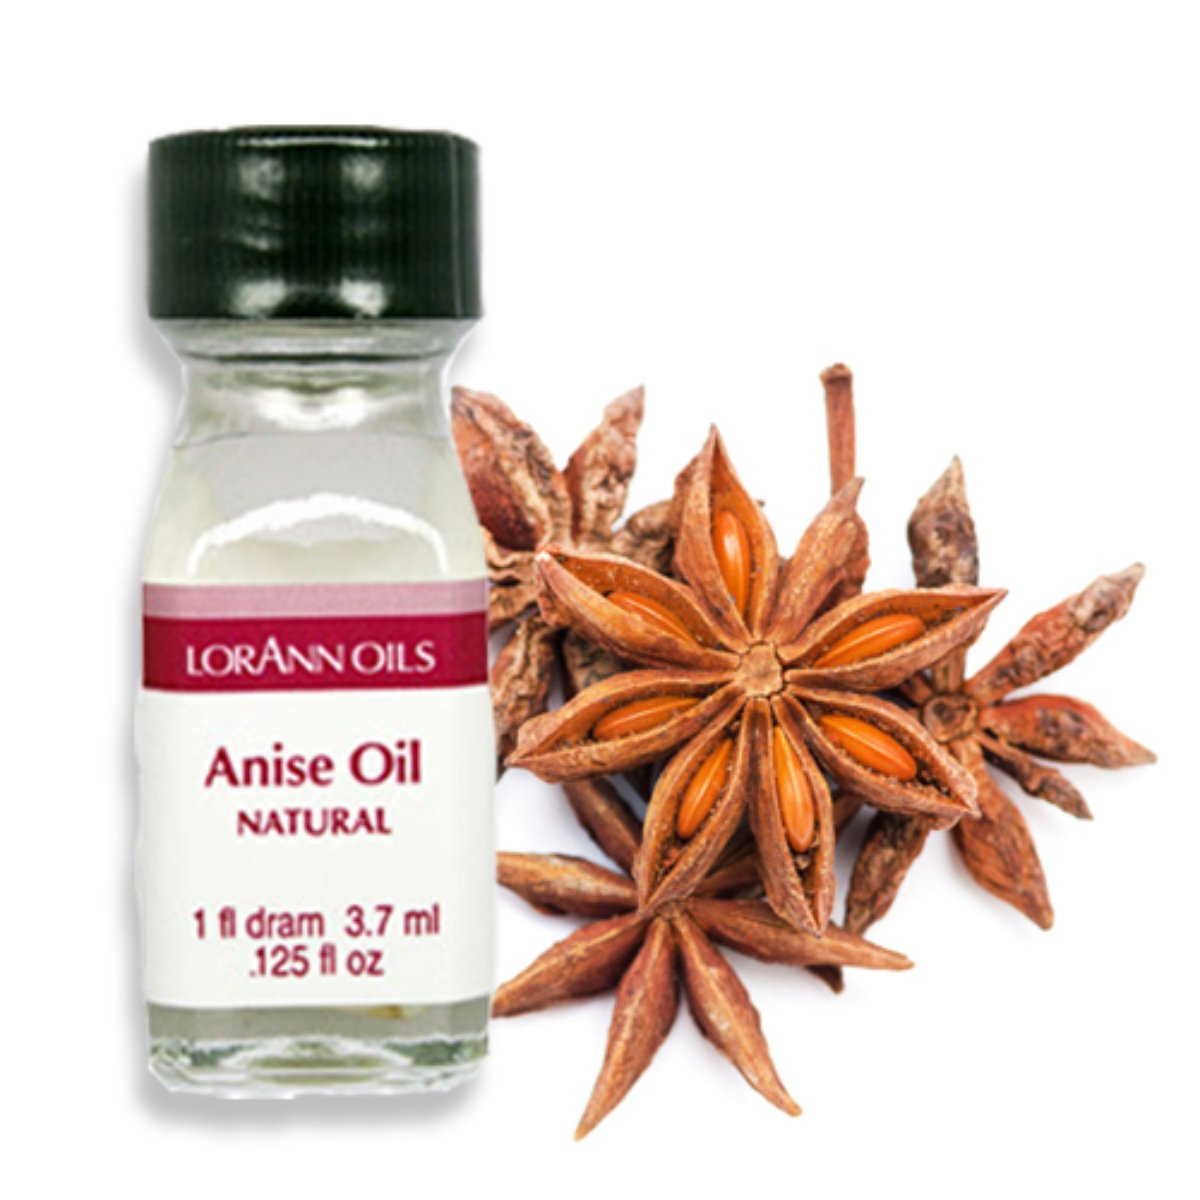 Anise Oil, Natural Flavor 1 Dram - Bake Supply Plus